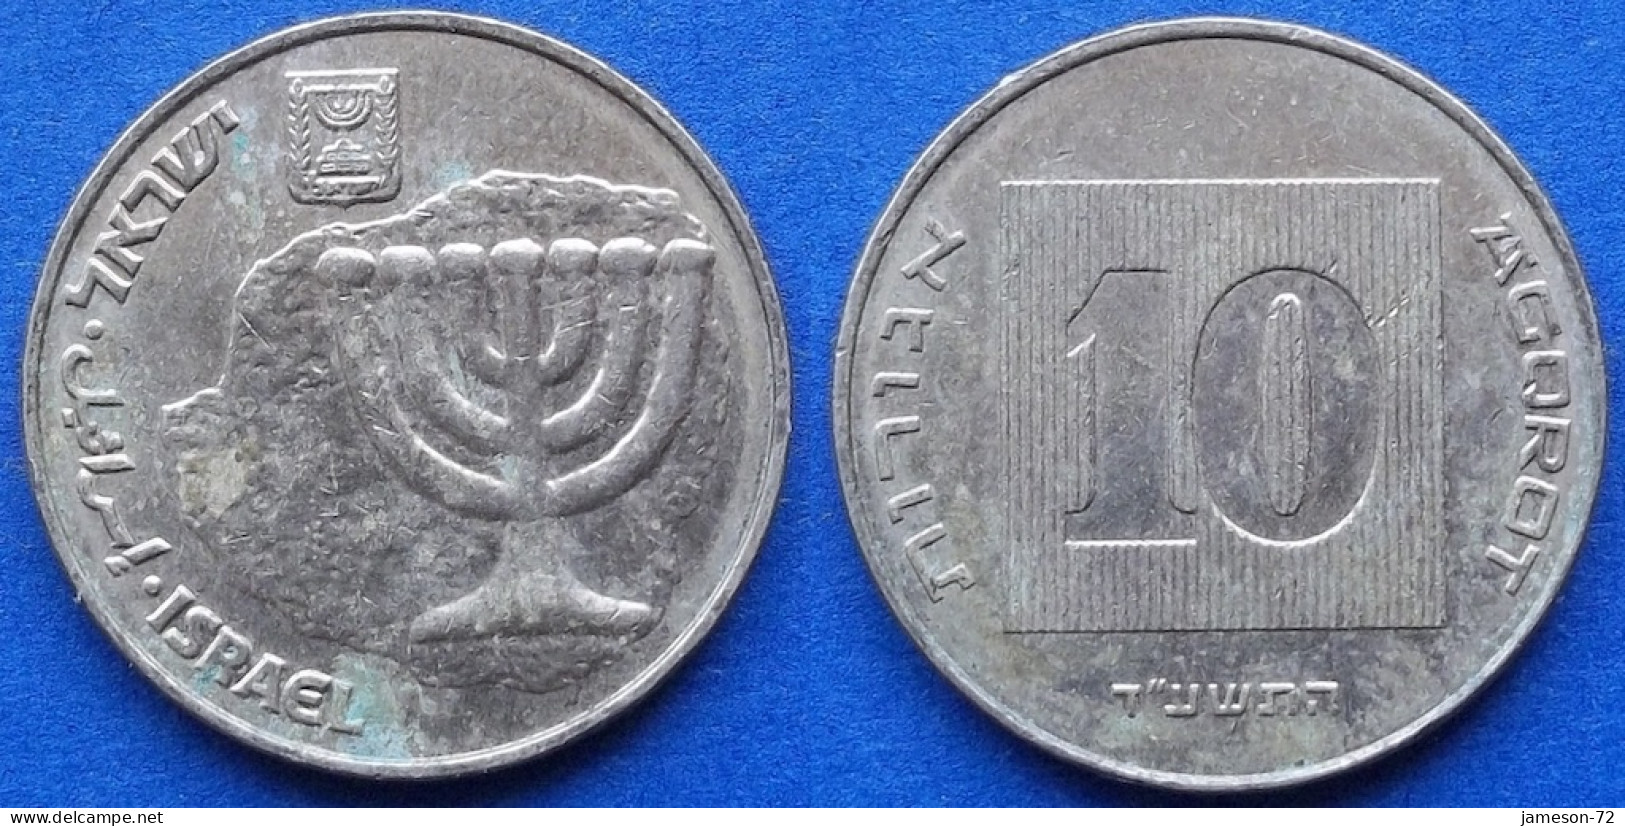 ISRAEL - 10 Agorot JE 5774 (2014AD) "Menorah" KM# 158 Monetary Reform (1985) - Edelweiss Coins - Israël